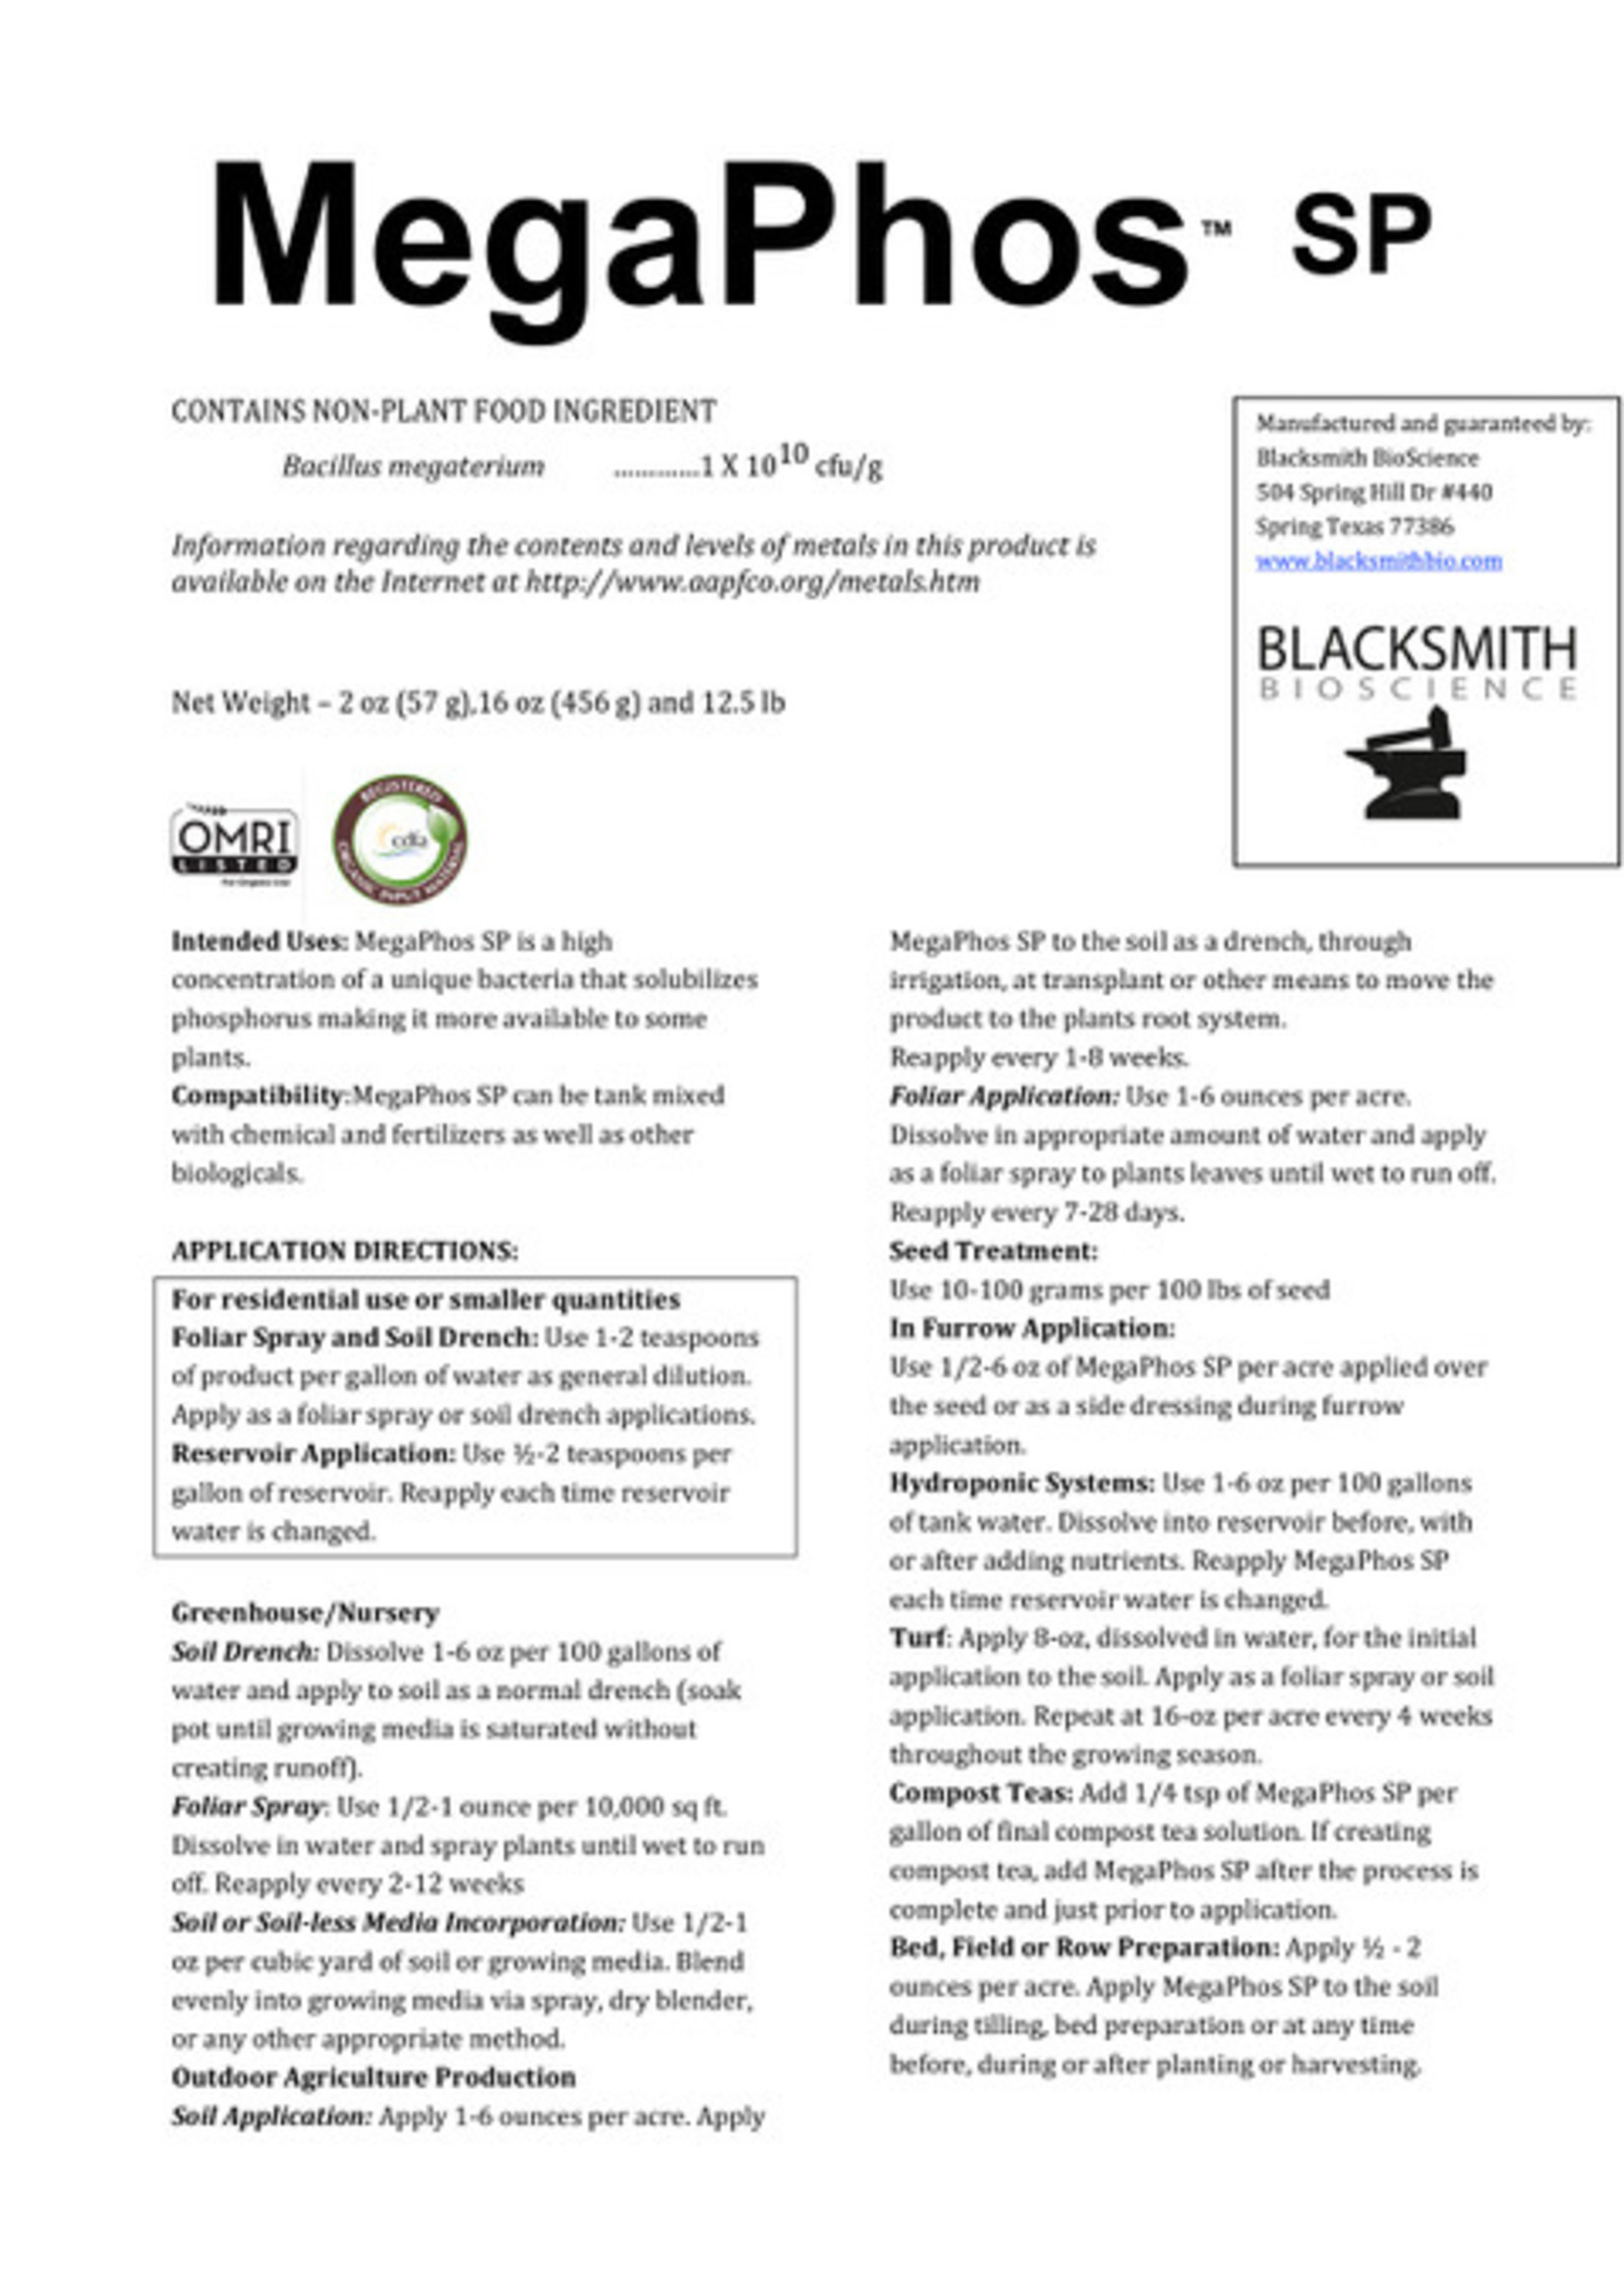 Blacksmith Bioscience MegaPhos